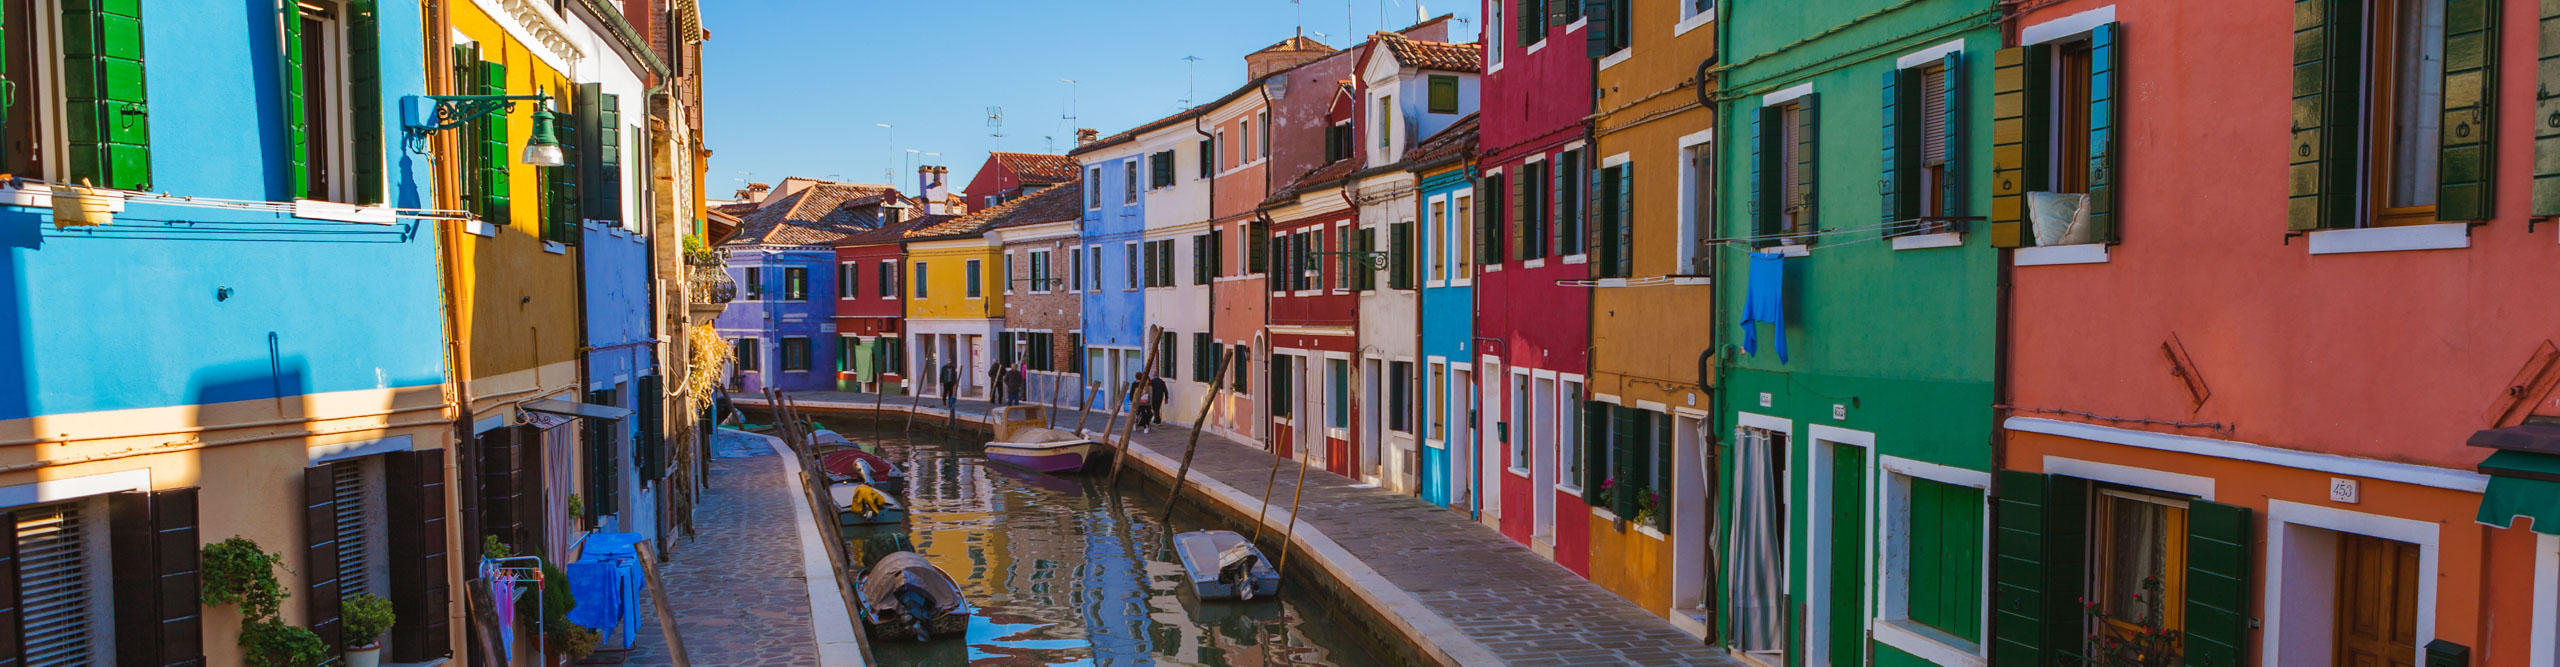 Rainbow coloured buildings along the canal in Venice 